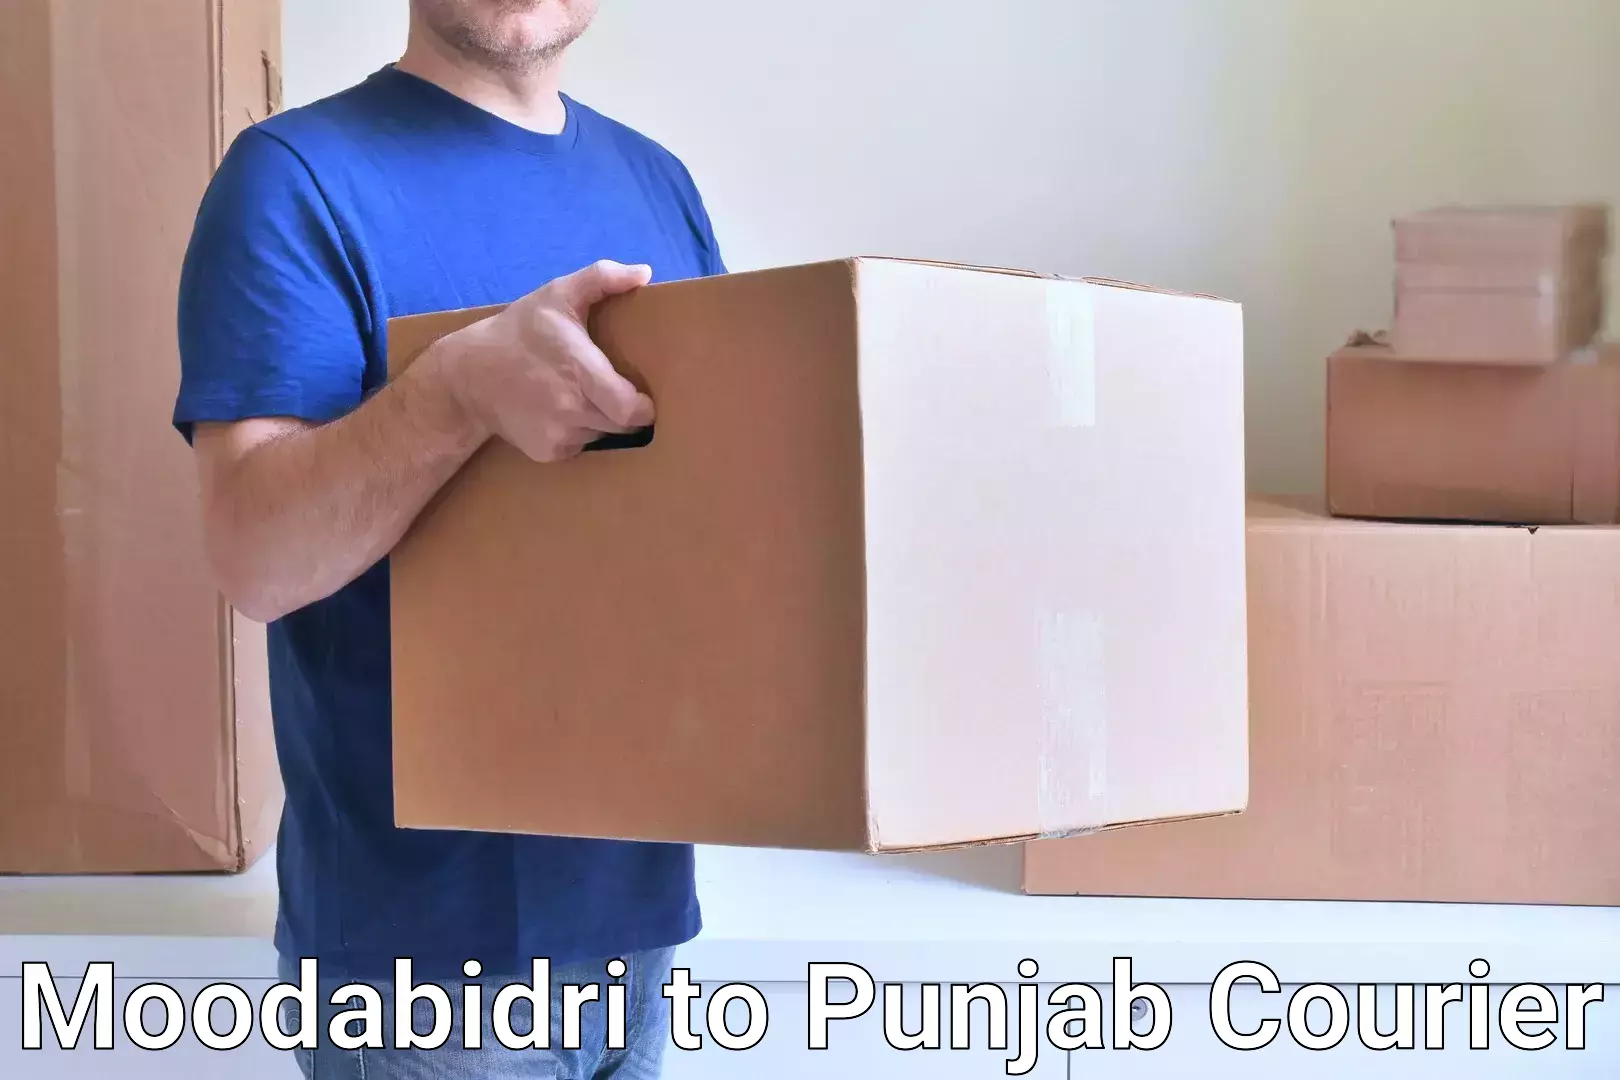 Overnight delivery services Moodabidri to Punjab